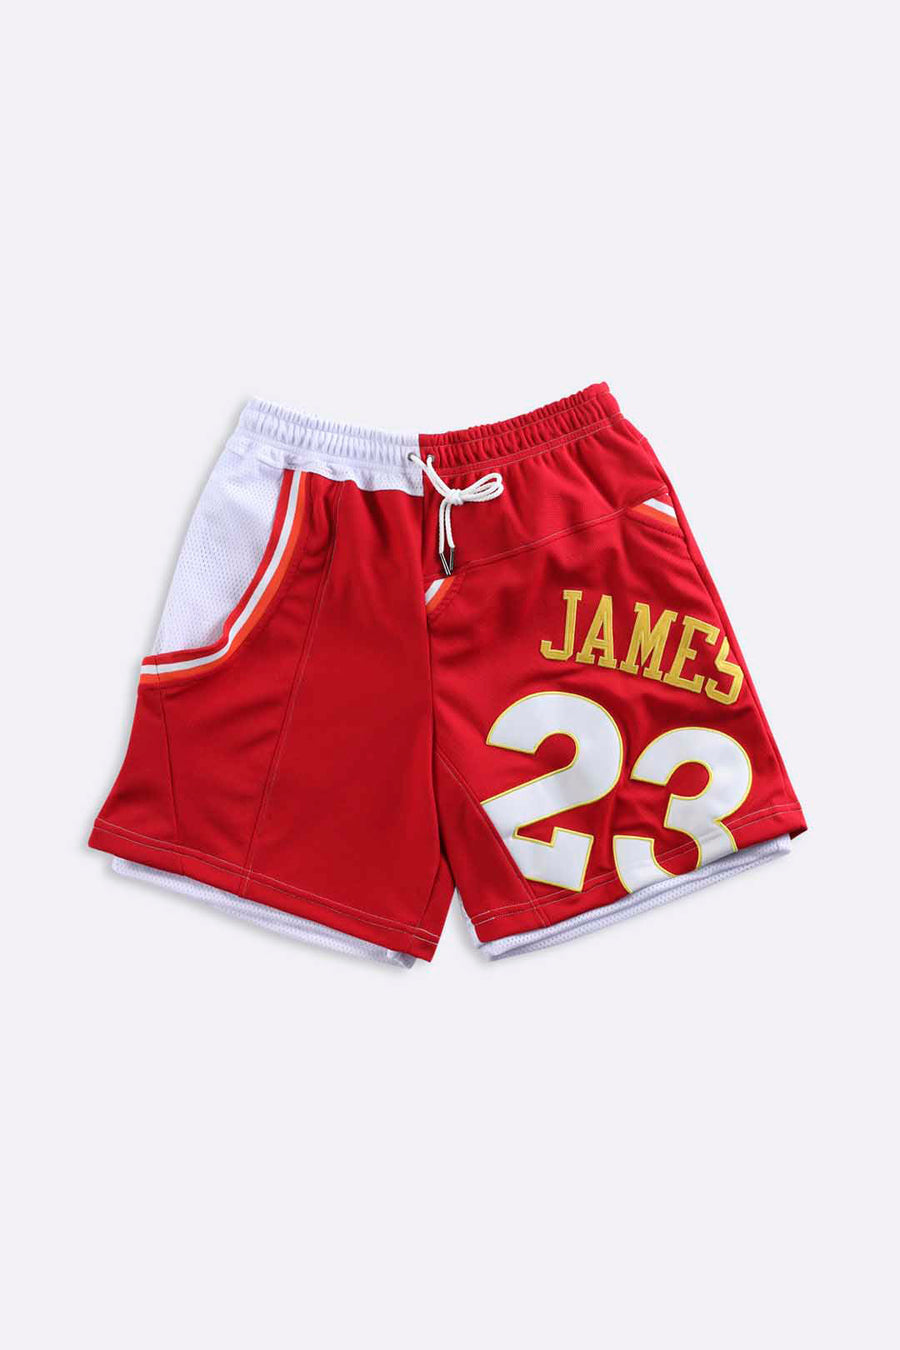 Rework Unisex Cavaliers NBA Jersey Shorts - Women-M, Men-S